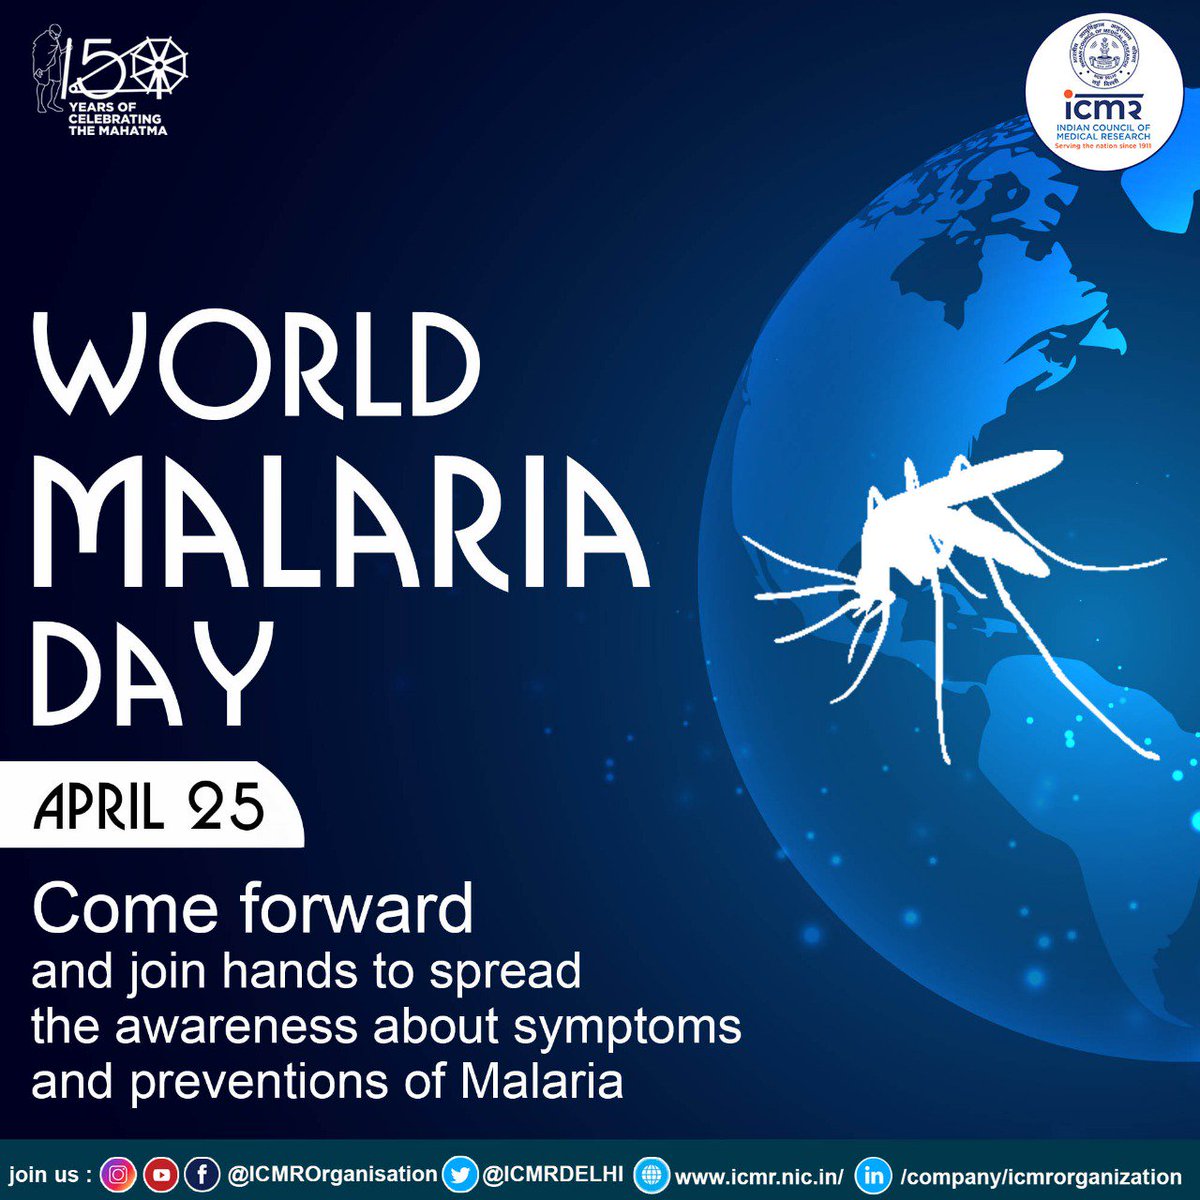 #WorldMalariaDay #Malaria #विश्वमलेरियादिवस #मलेरिया #Healthcare #HealthForAll #health @MoHFW_INDIA @NHPINDIA